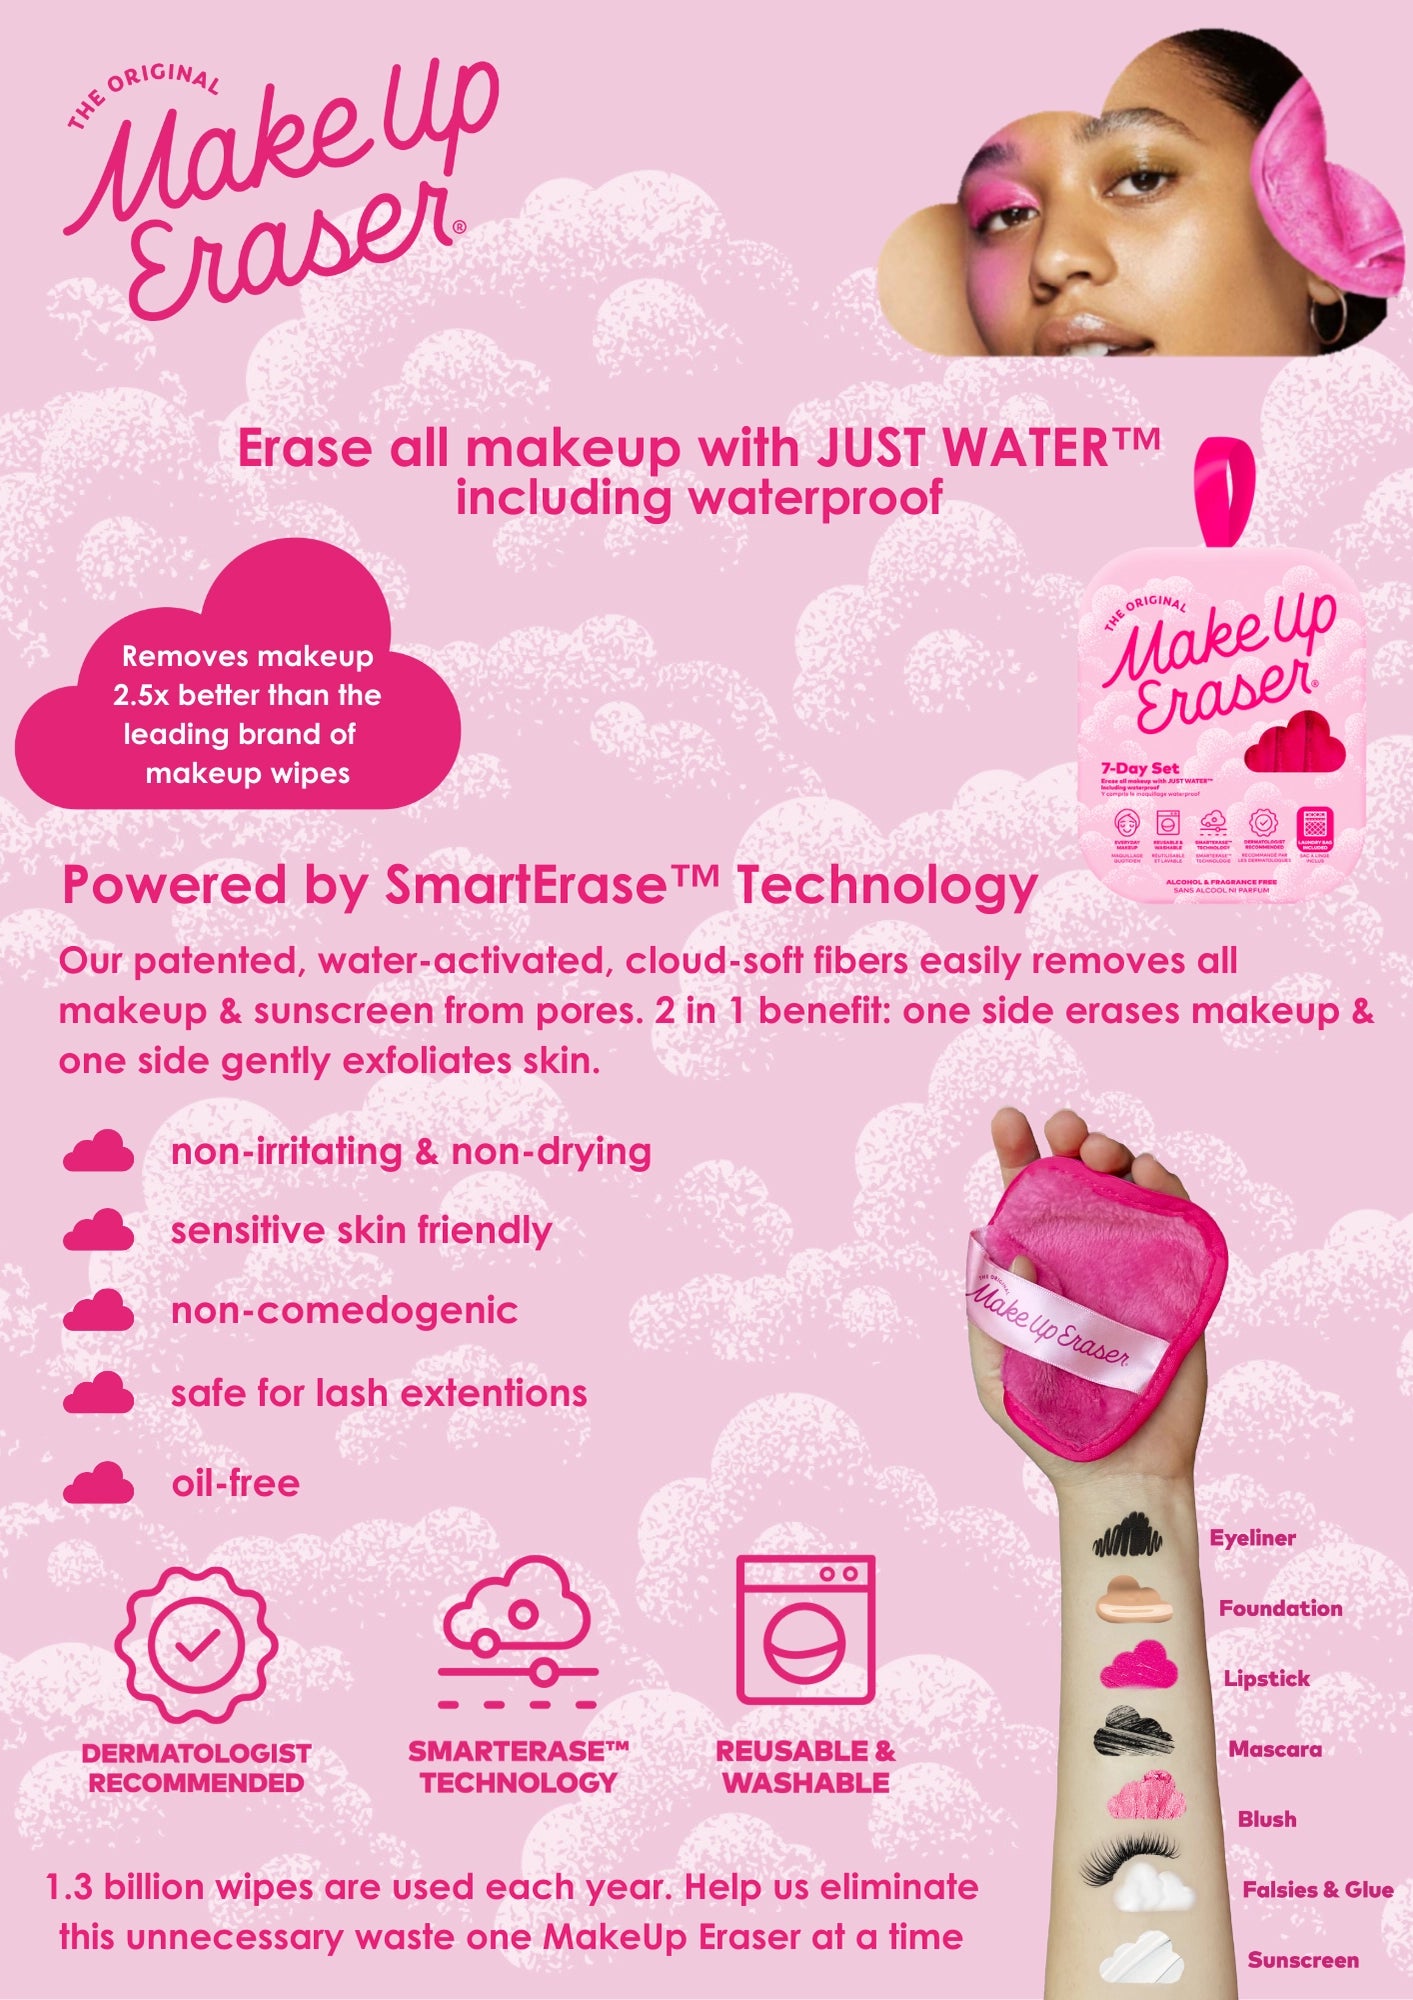 Make Up Eraser Mini Pro Black - Lavender Hills BeautyMakeup EraserRTMB01